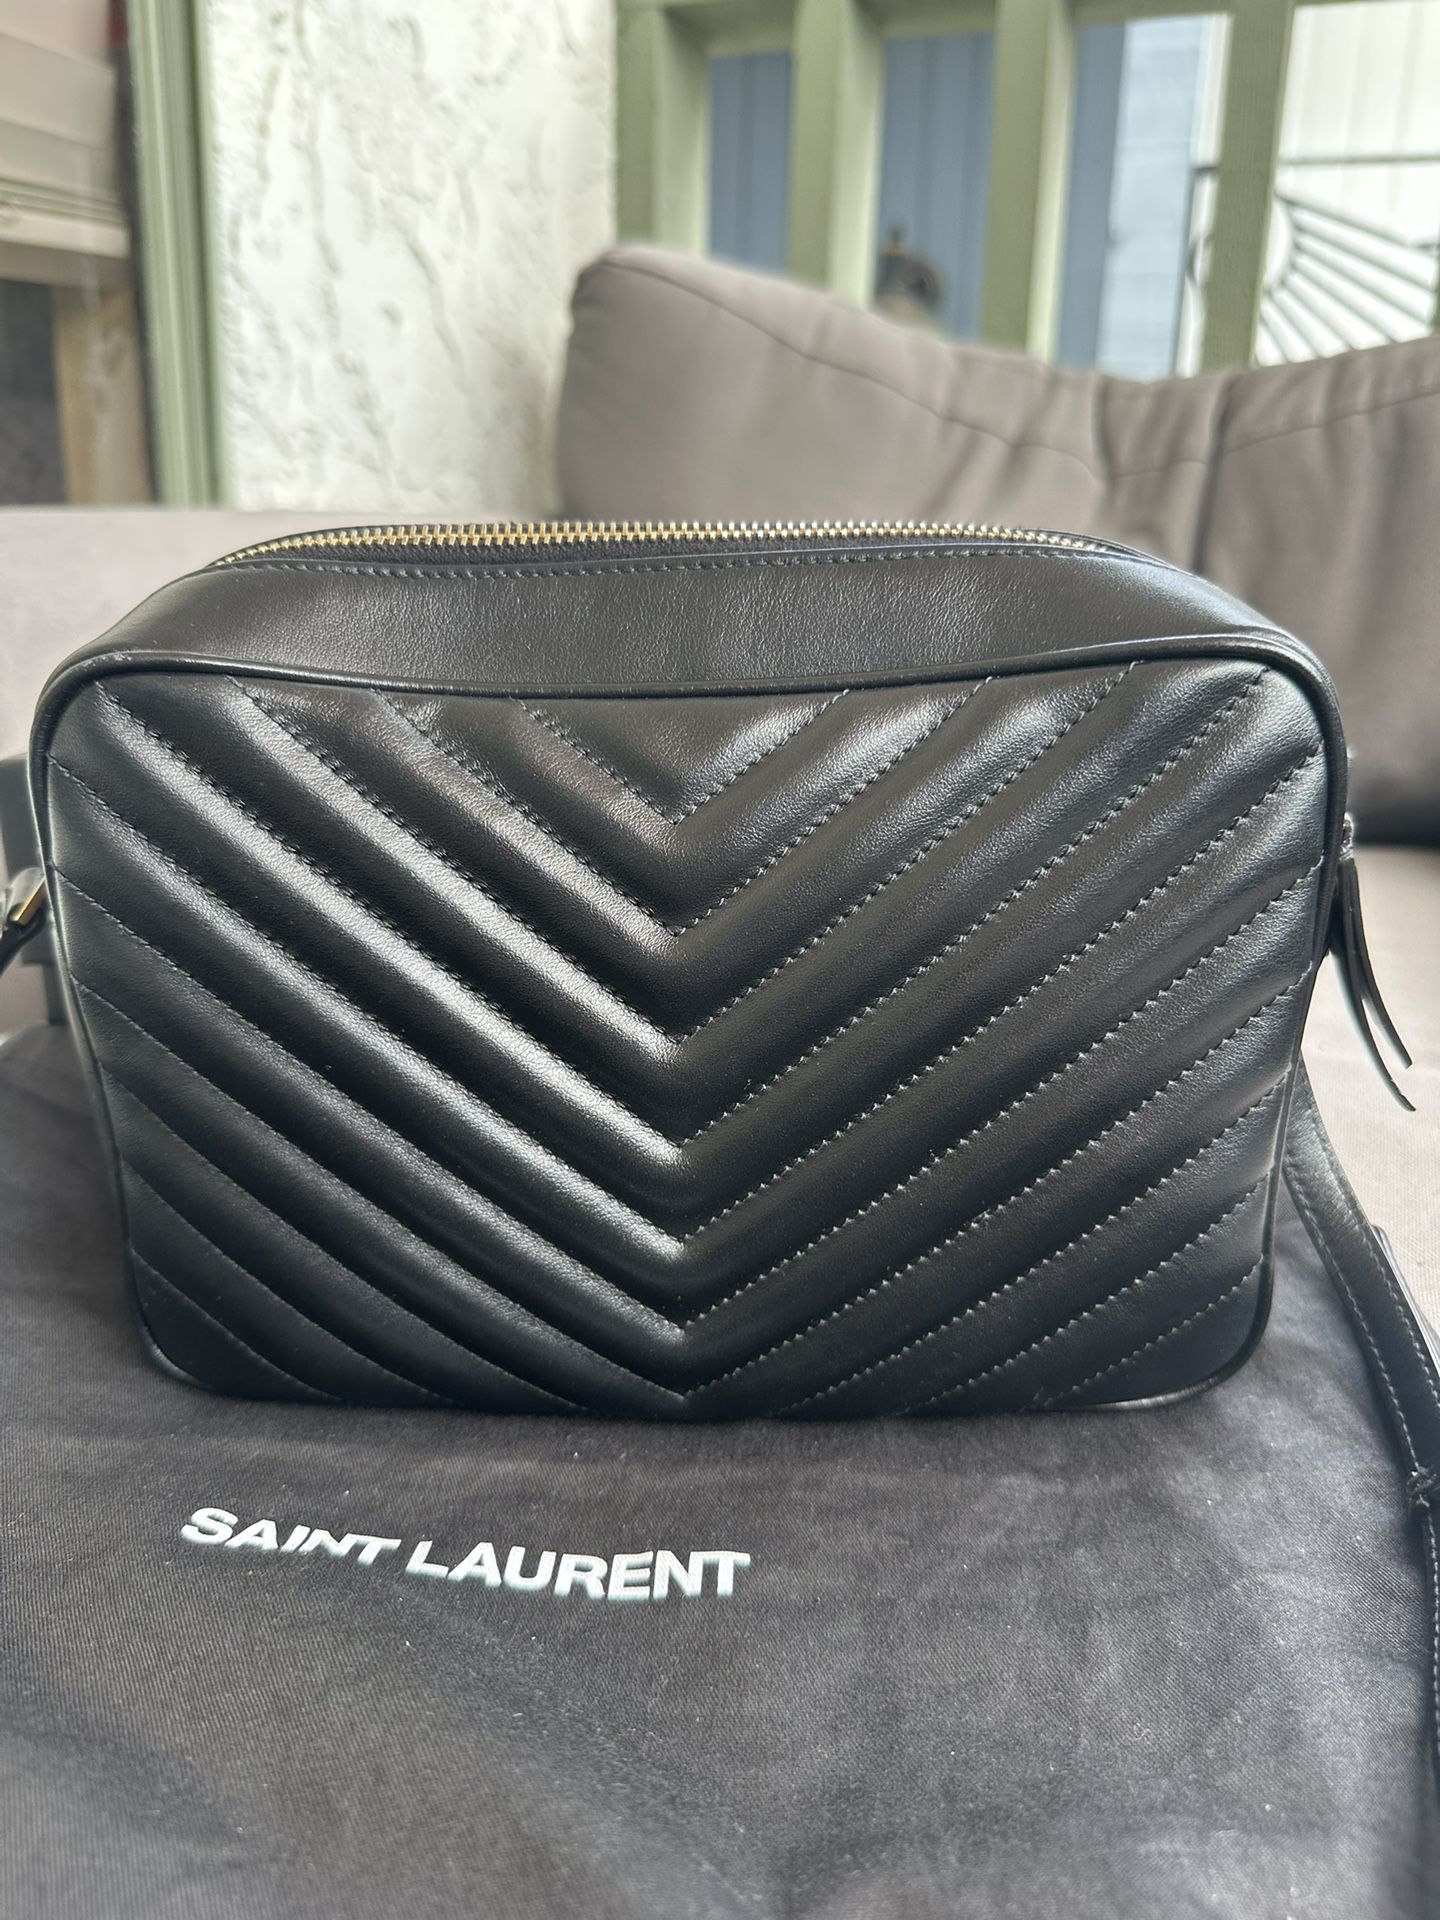 Saint Laurent Lou Camera Bag – Beccas Bags